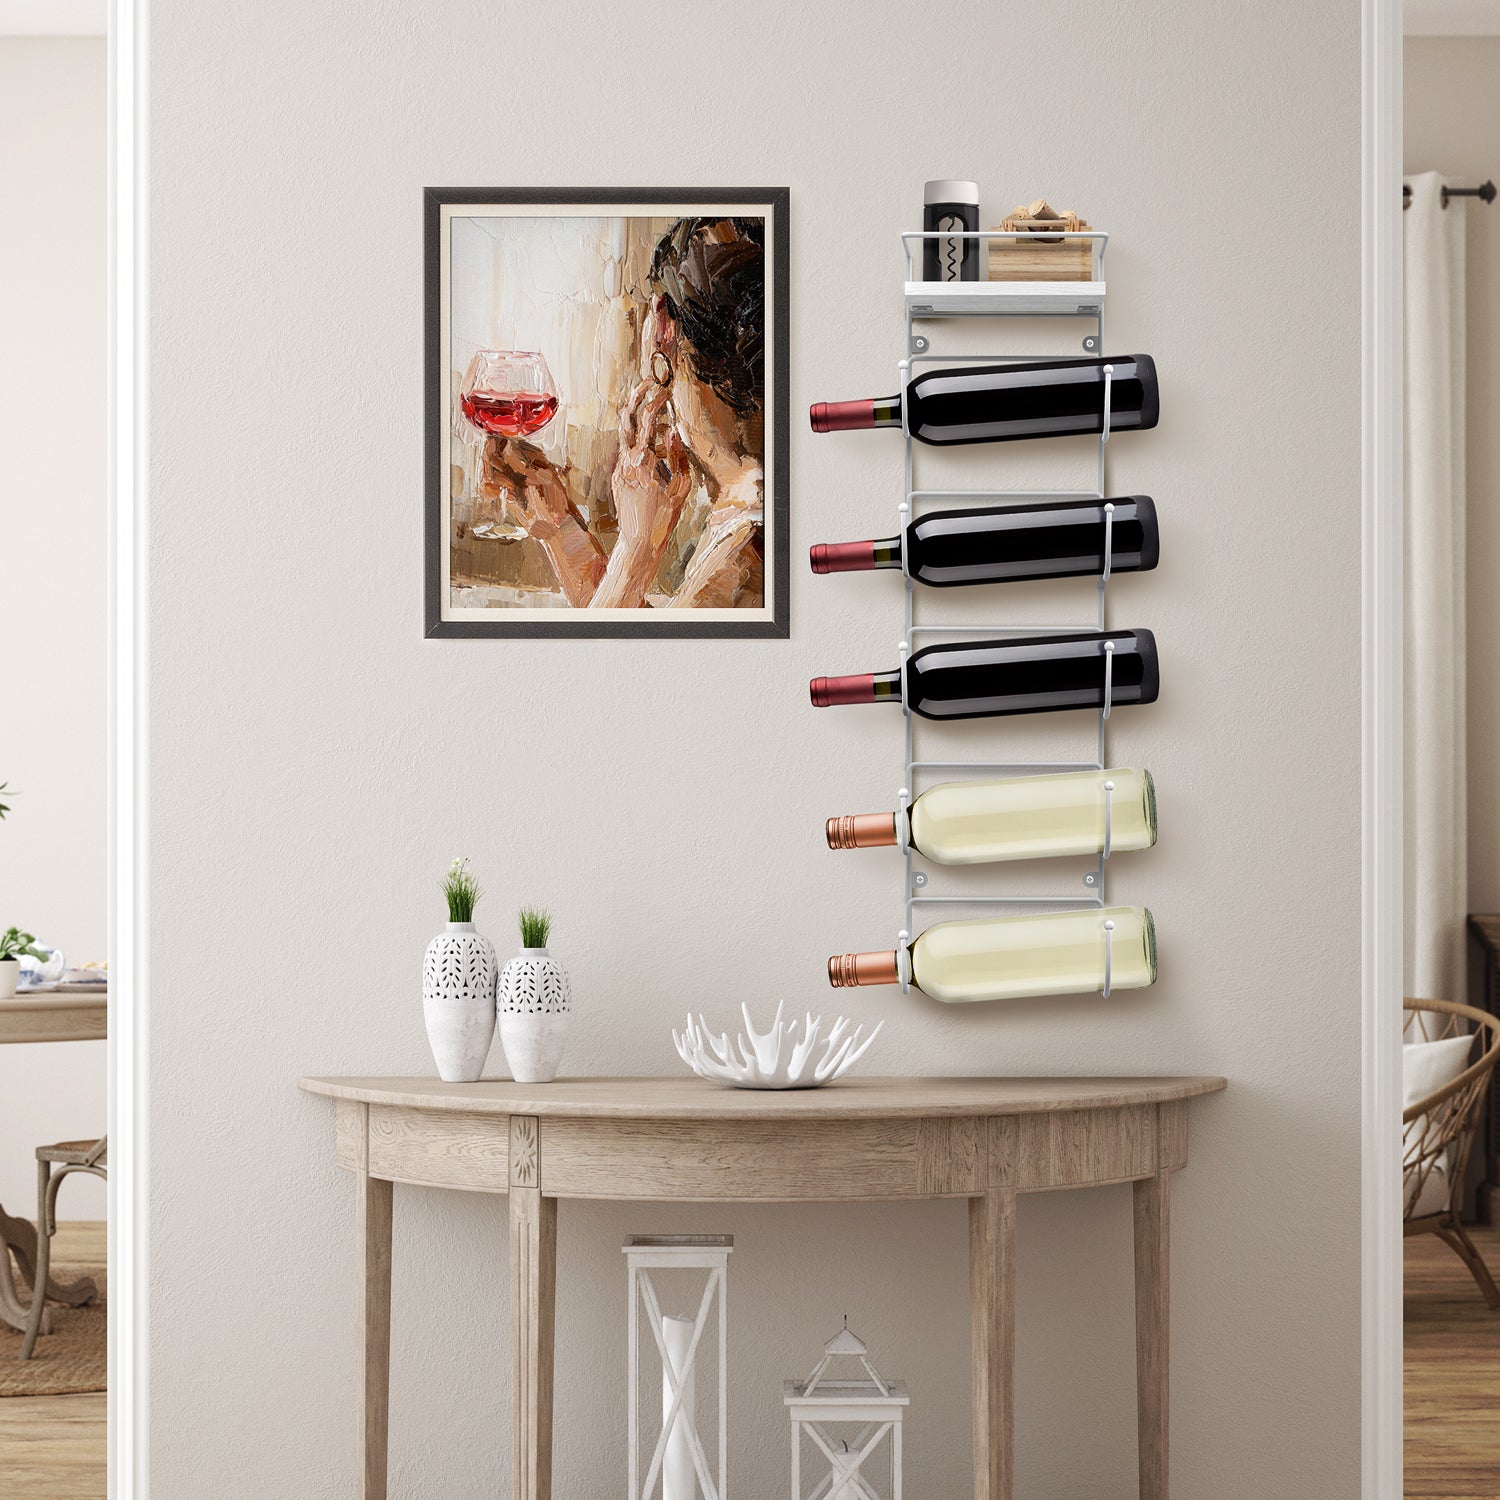 Wall Mounted Towel Rack with Shelf – Sorbus Home